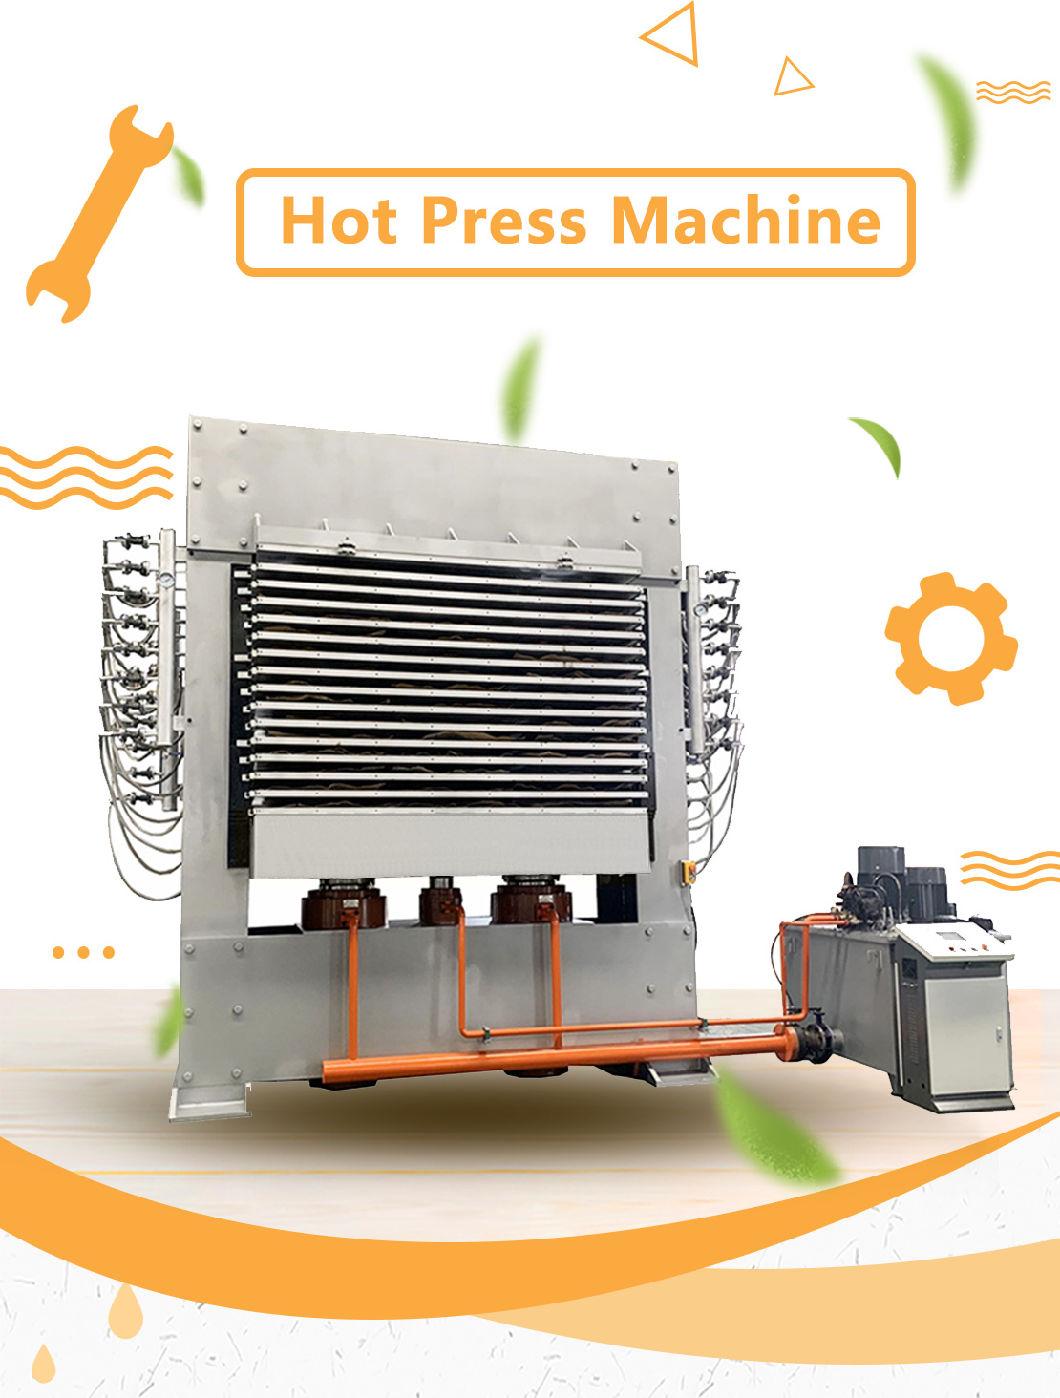 Hot Press Machine for Plywood / Hot Press Plywood / Hot Press Veneer Machine